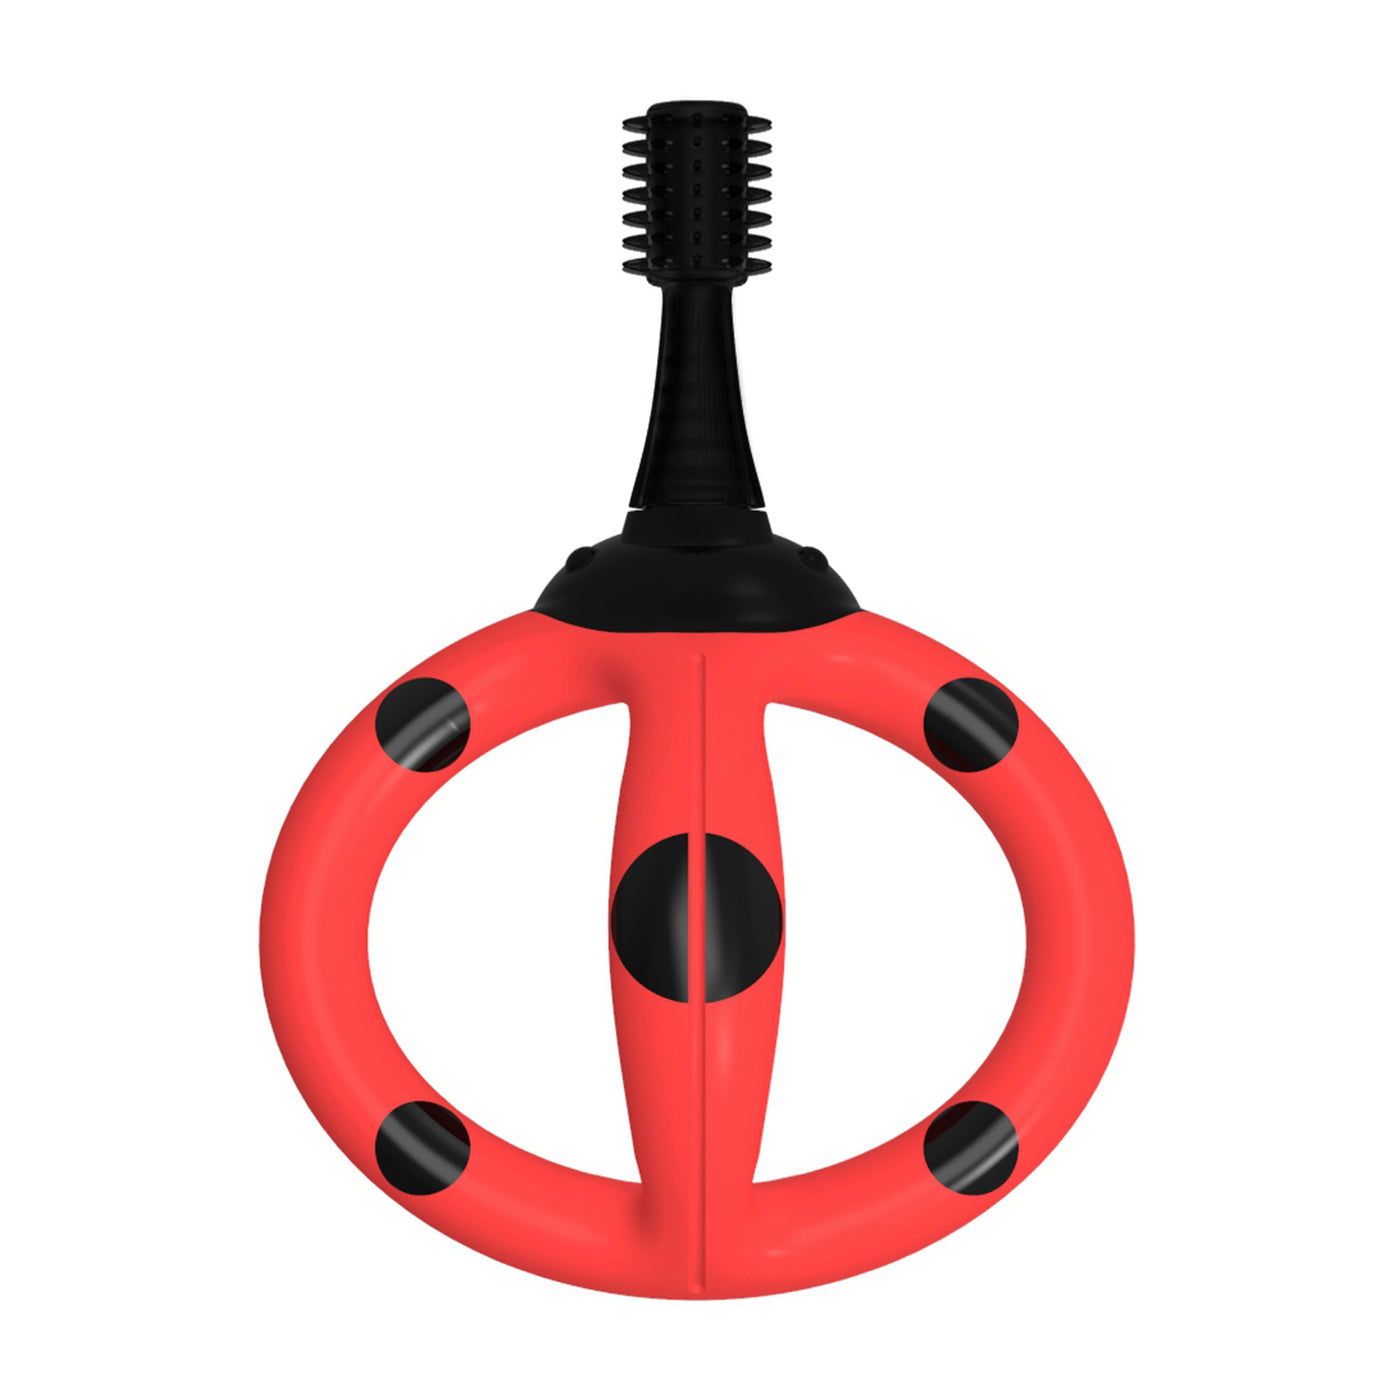 Mombella Ladybug Teething & Toothbrush For 3 Month+ Baby Original Design - mombella